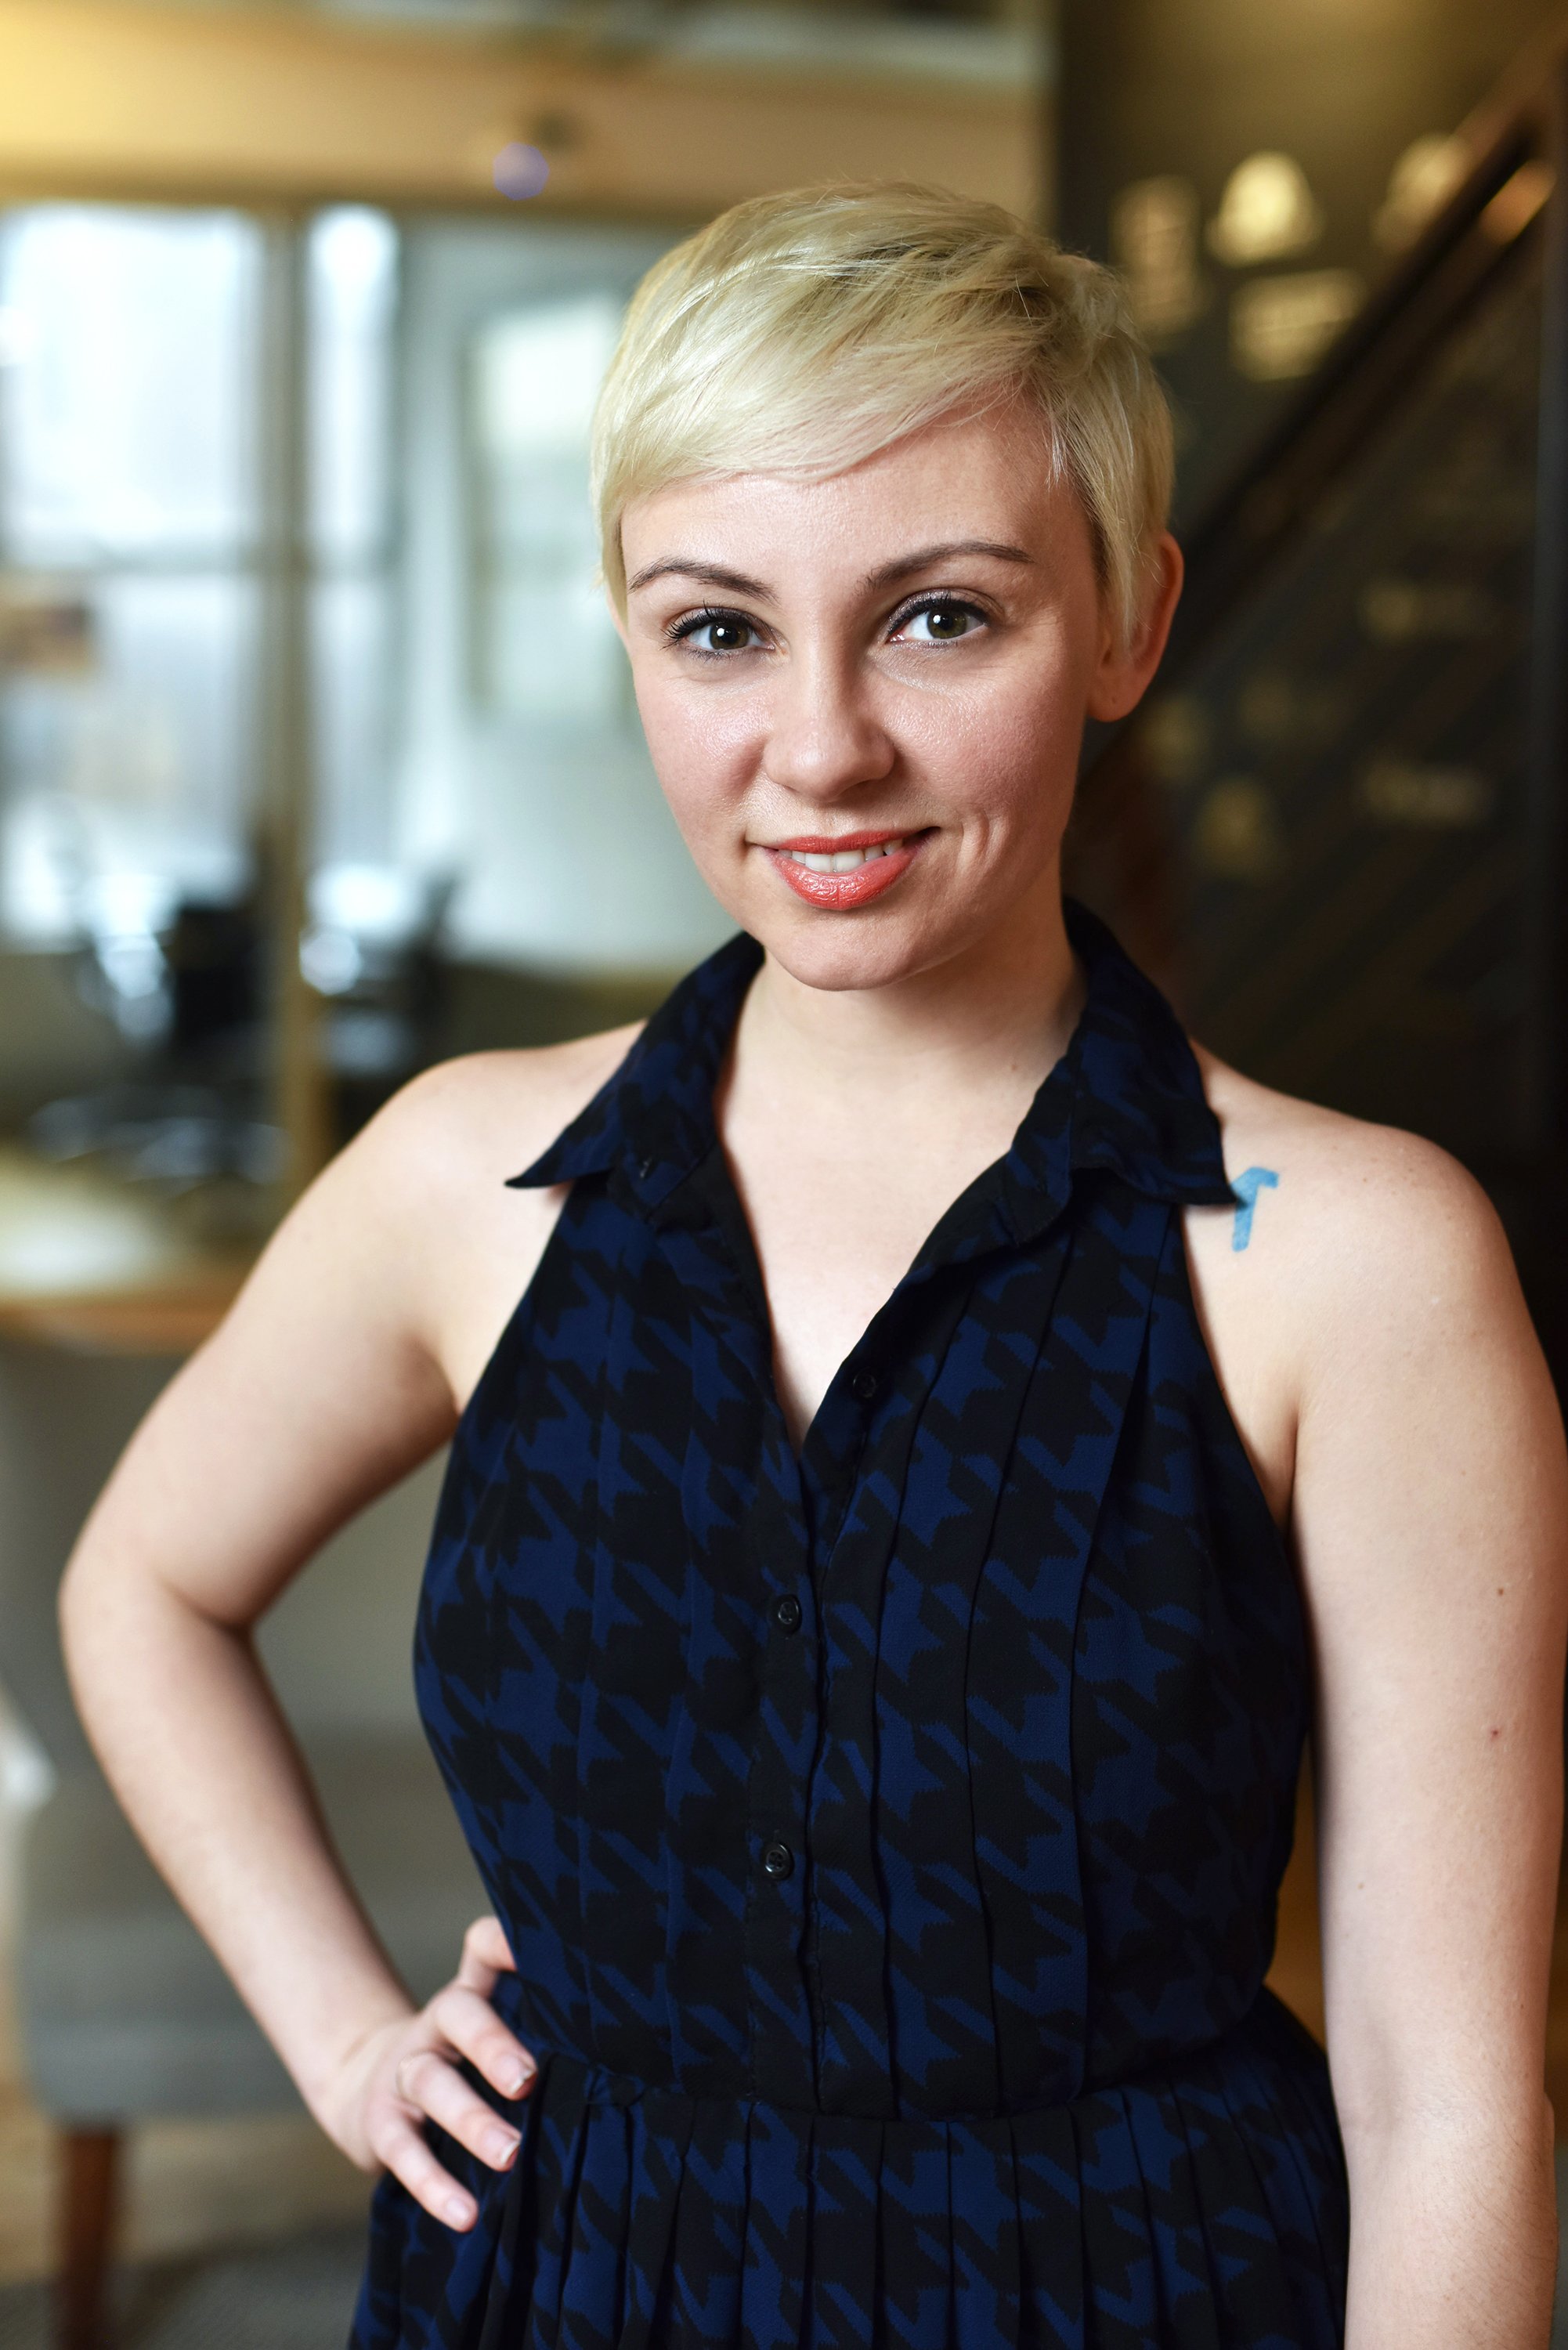  Corporate headshot of a woman in a dark colored checkered dress by Ari Scott, NYC headshot photographer. 